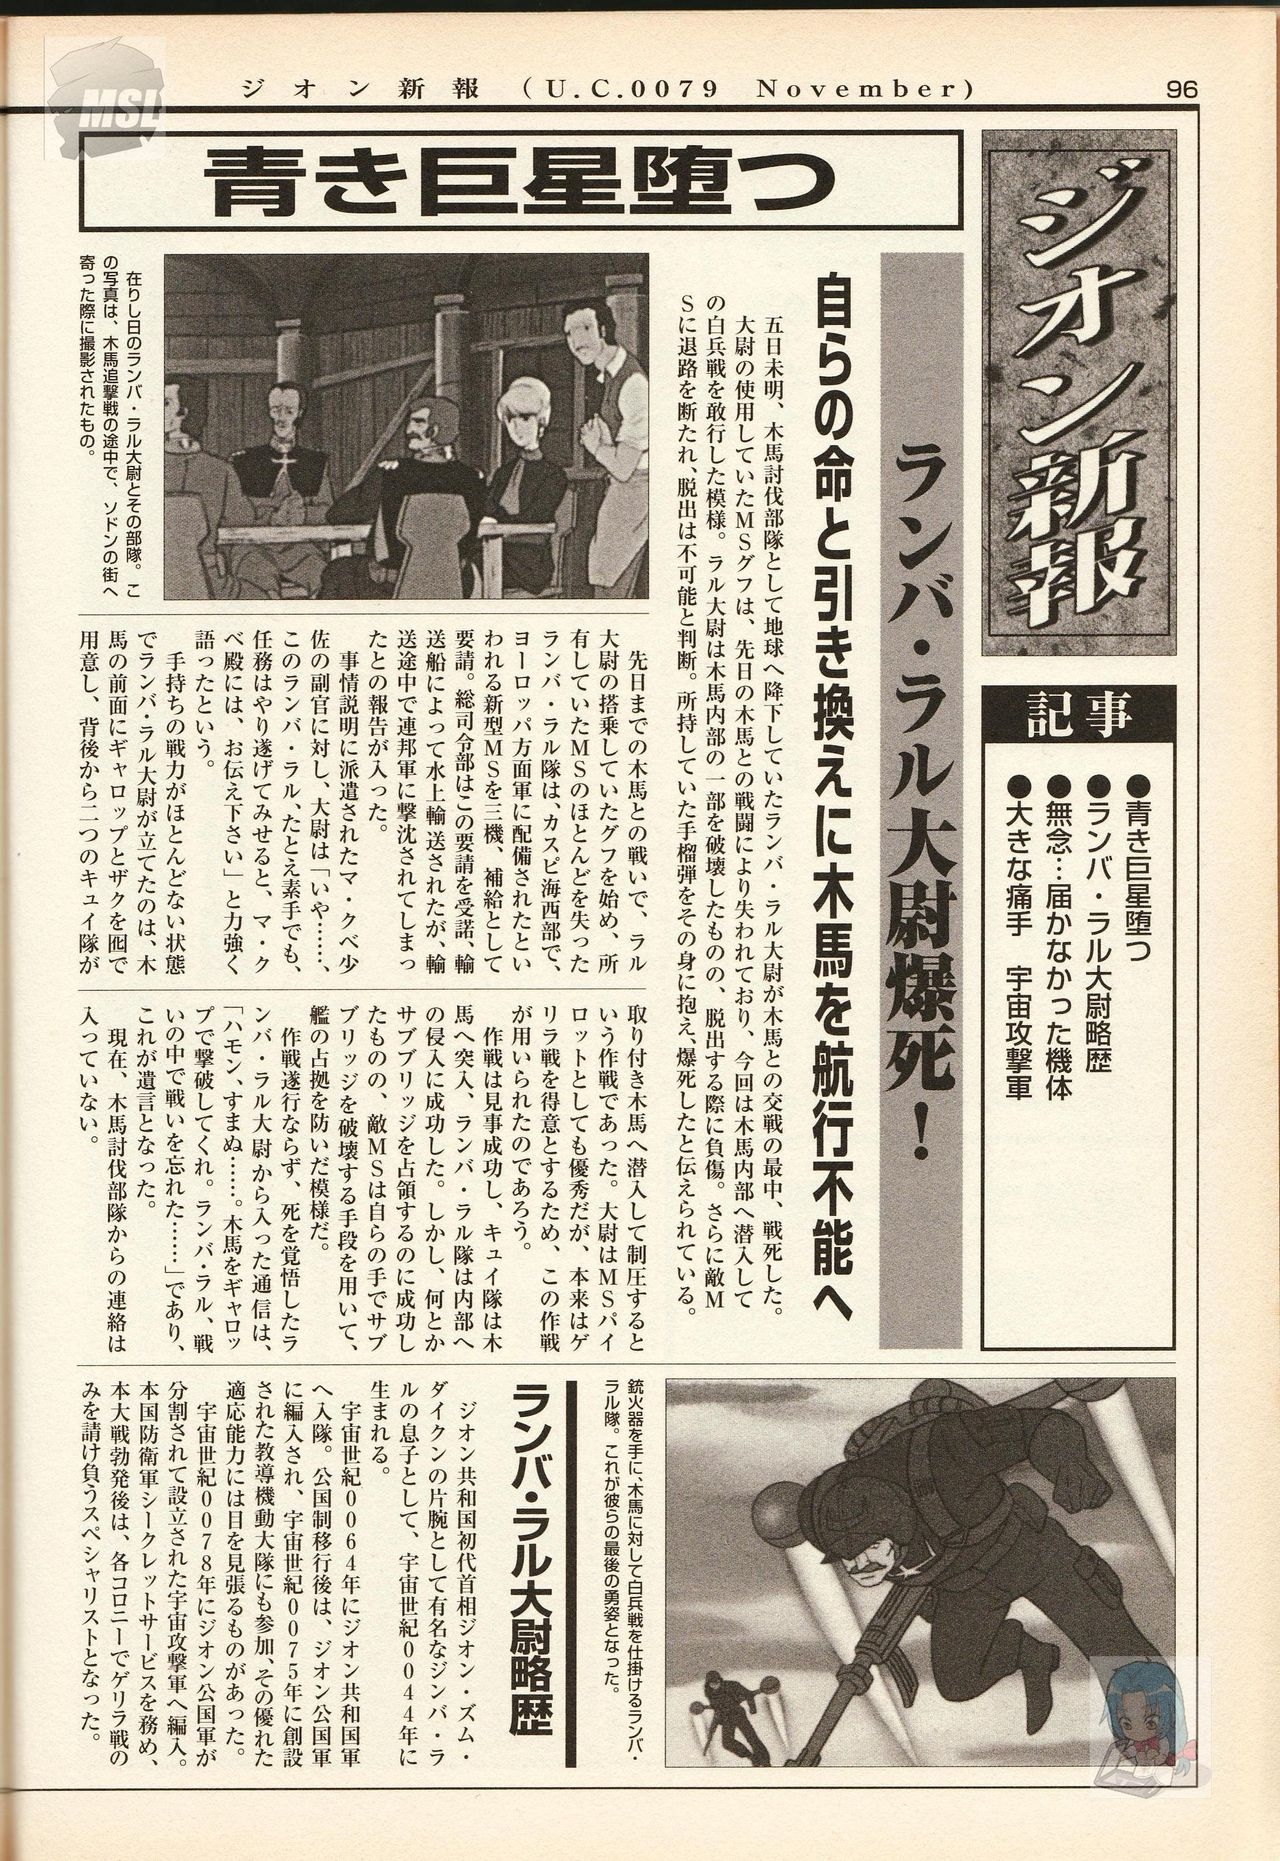 Mobile Suit Gundam - Zeon - Classified Records 99